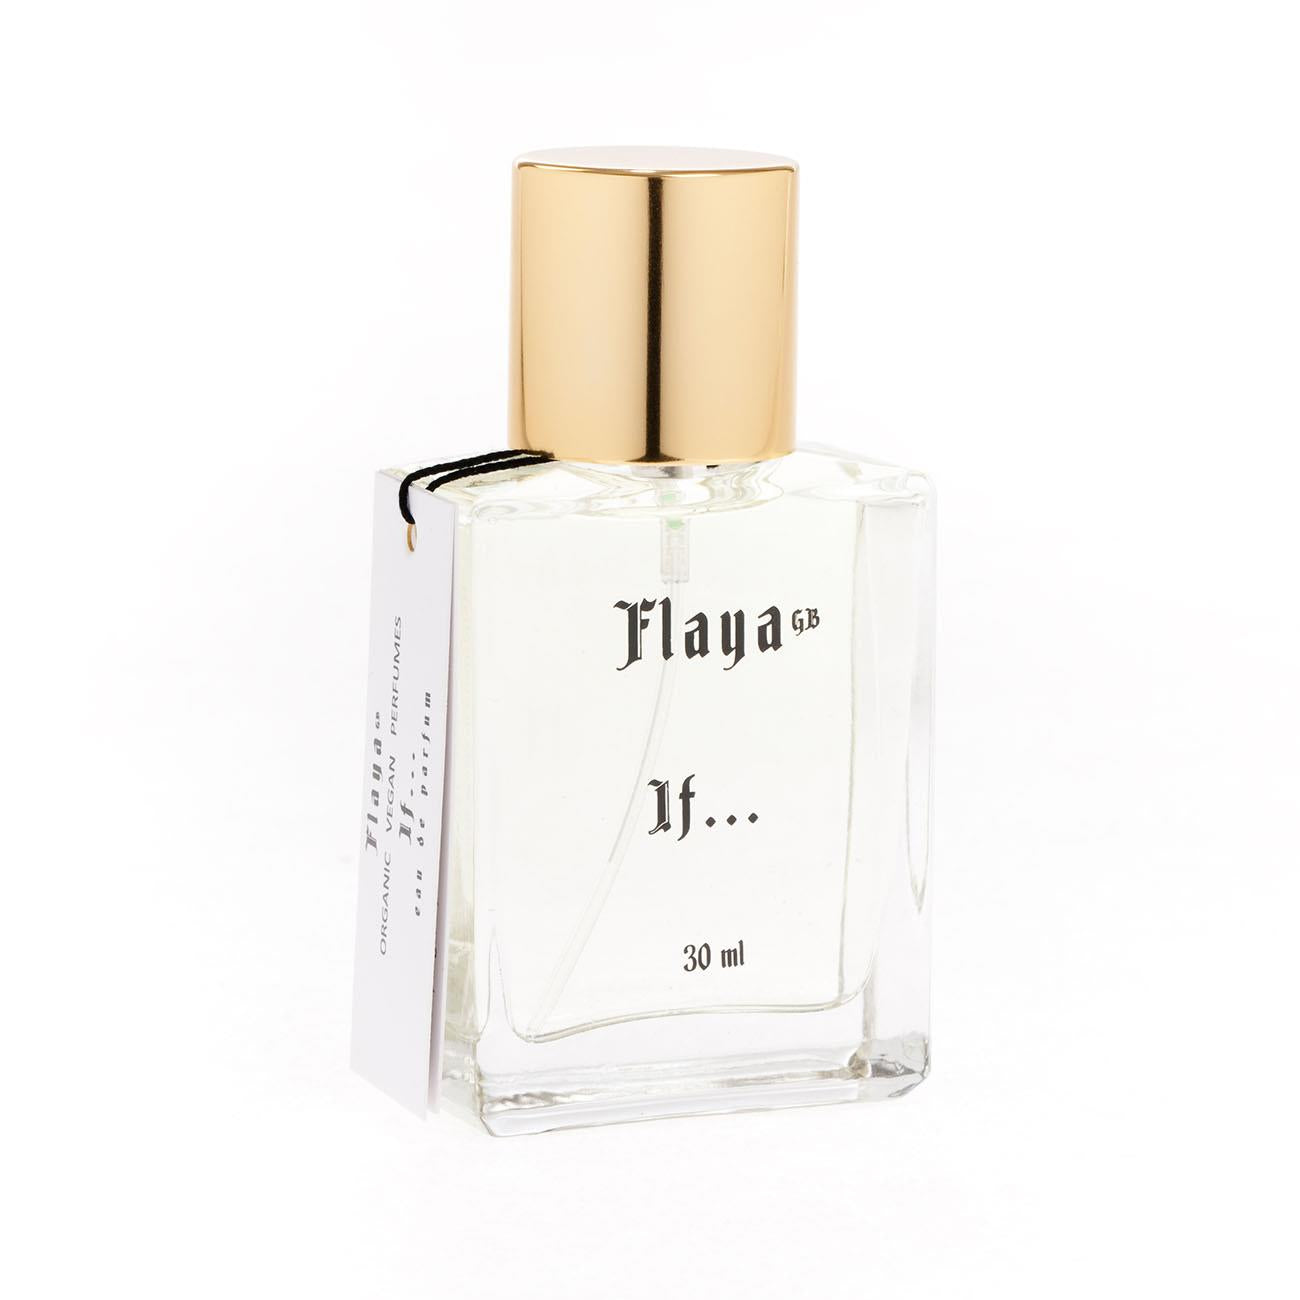 IF... Perfume 30ml